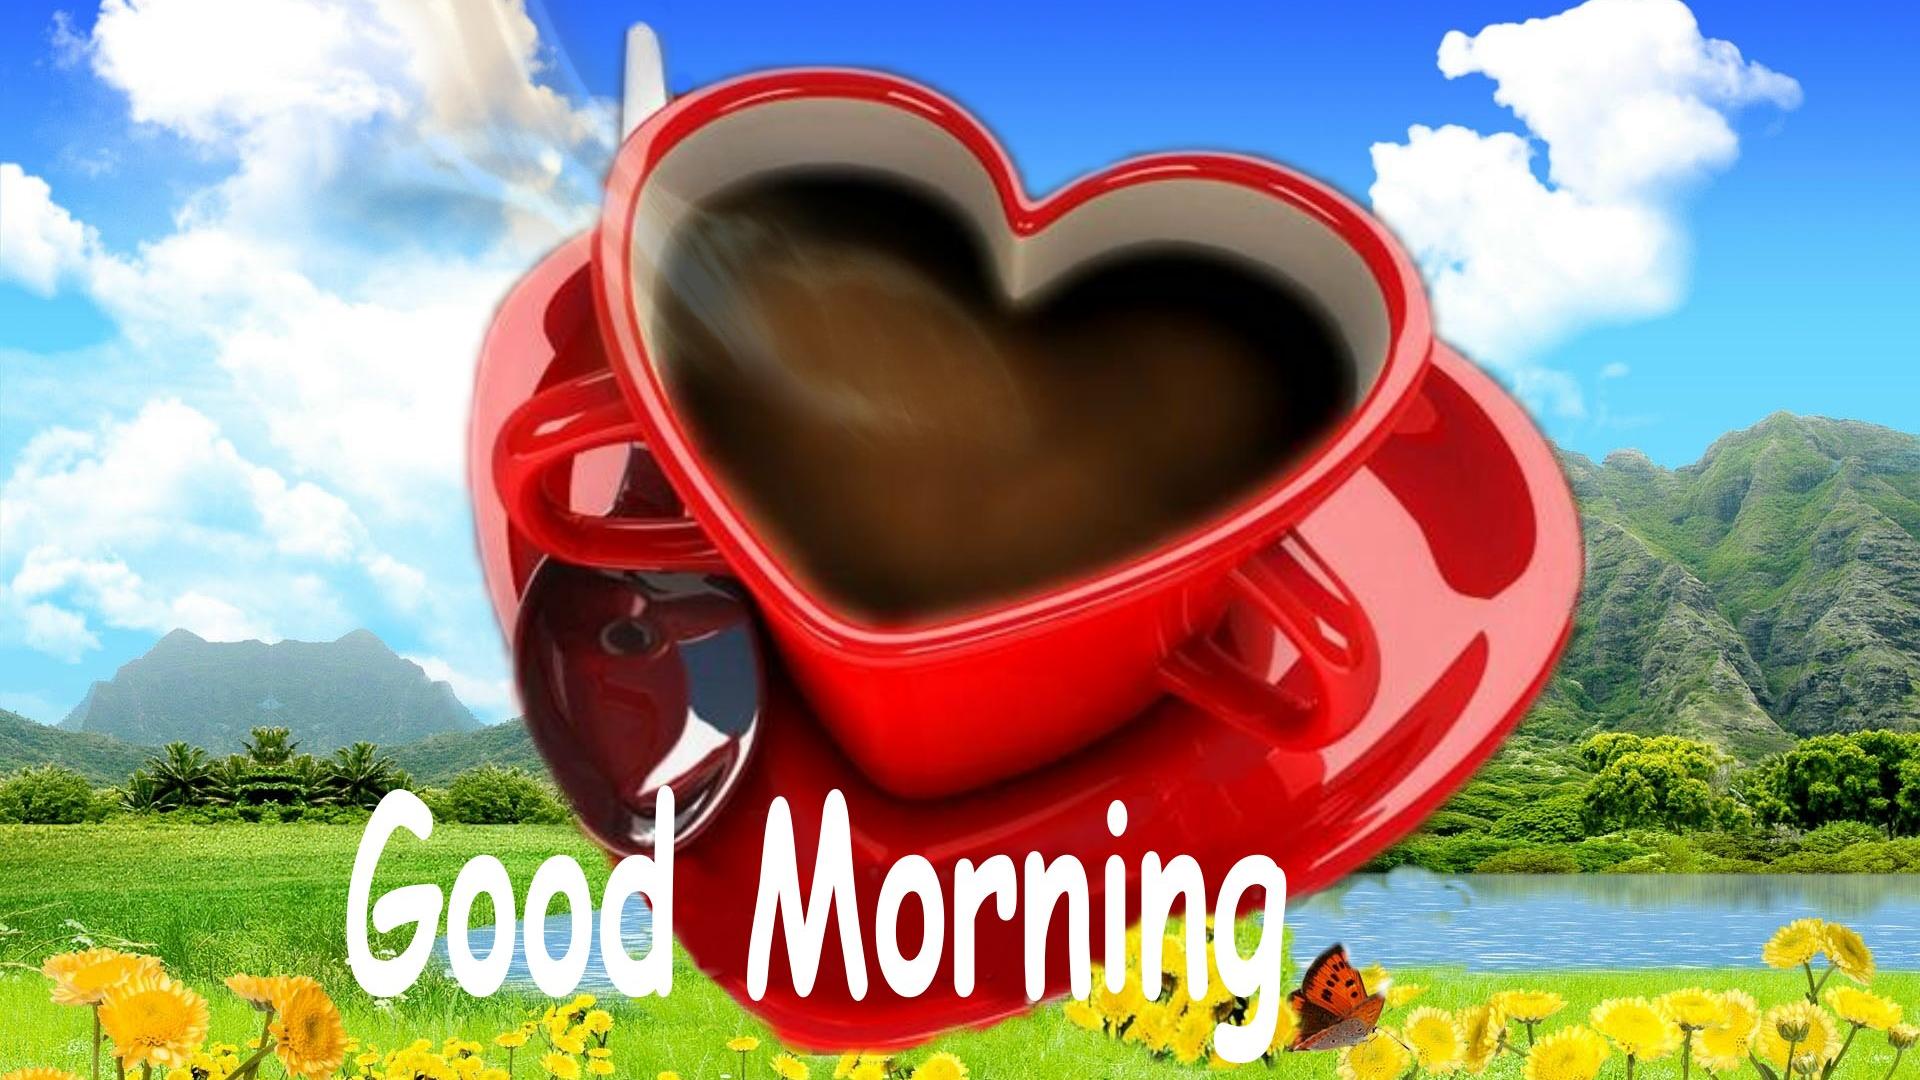 Love Good Morning Image HD Wallpaper Of Greeting